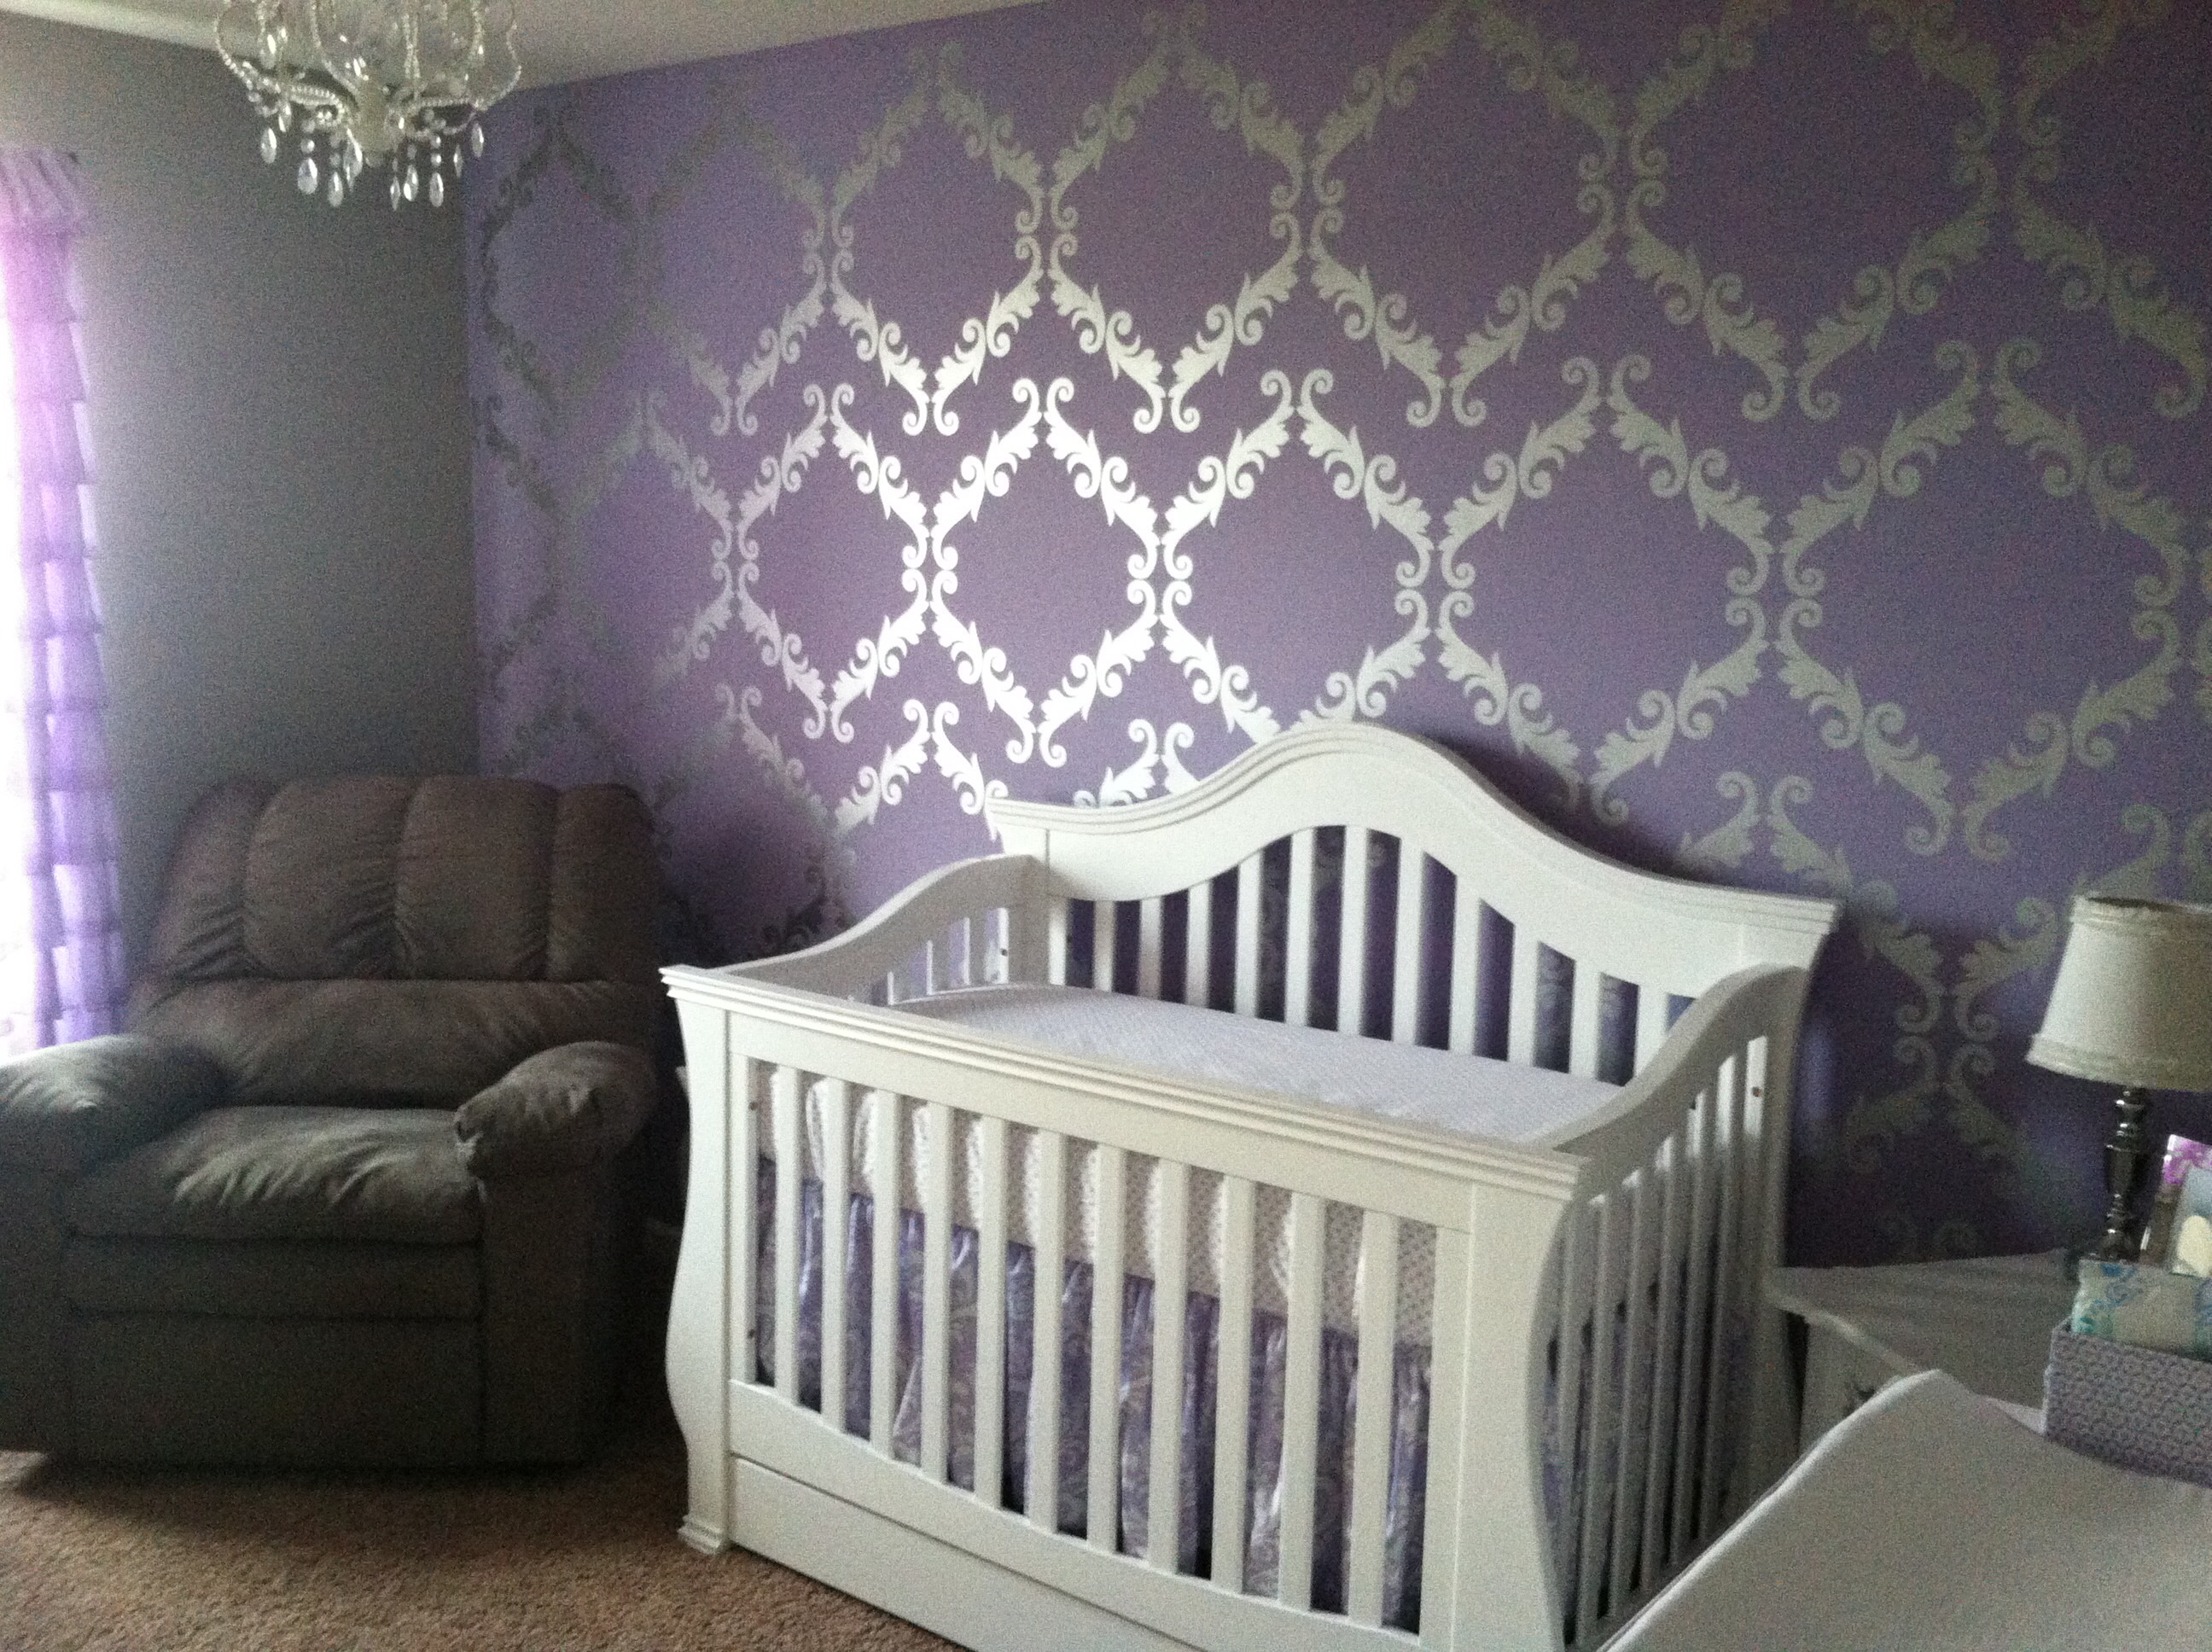 2592x1936 Purple, metallic silver and white baby girl's nursery